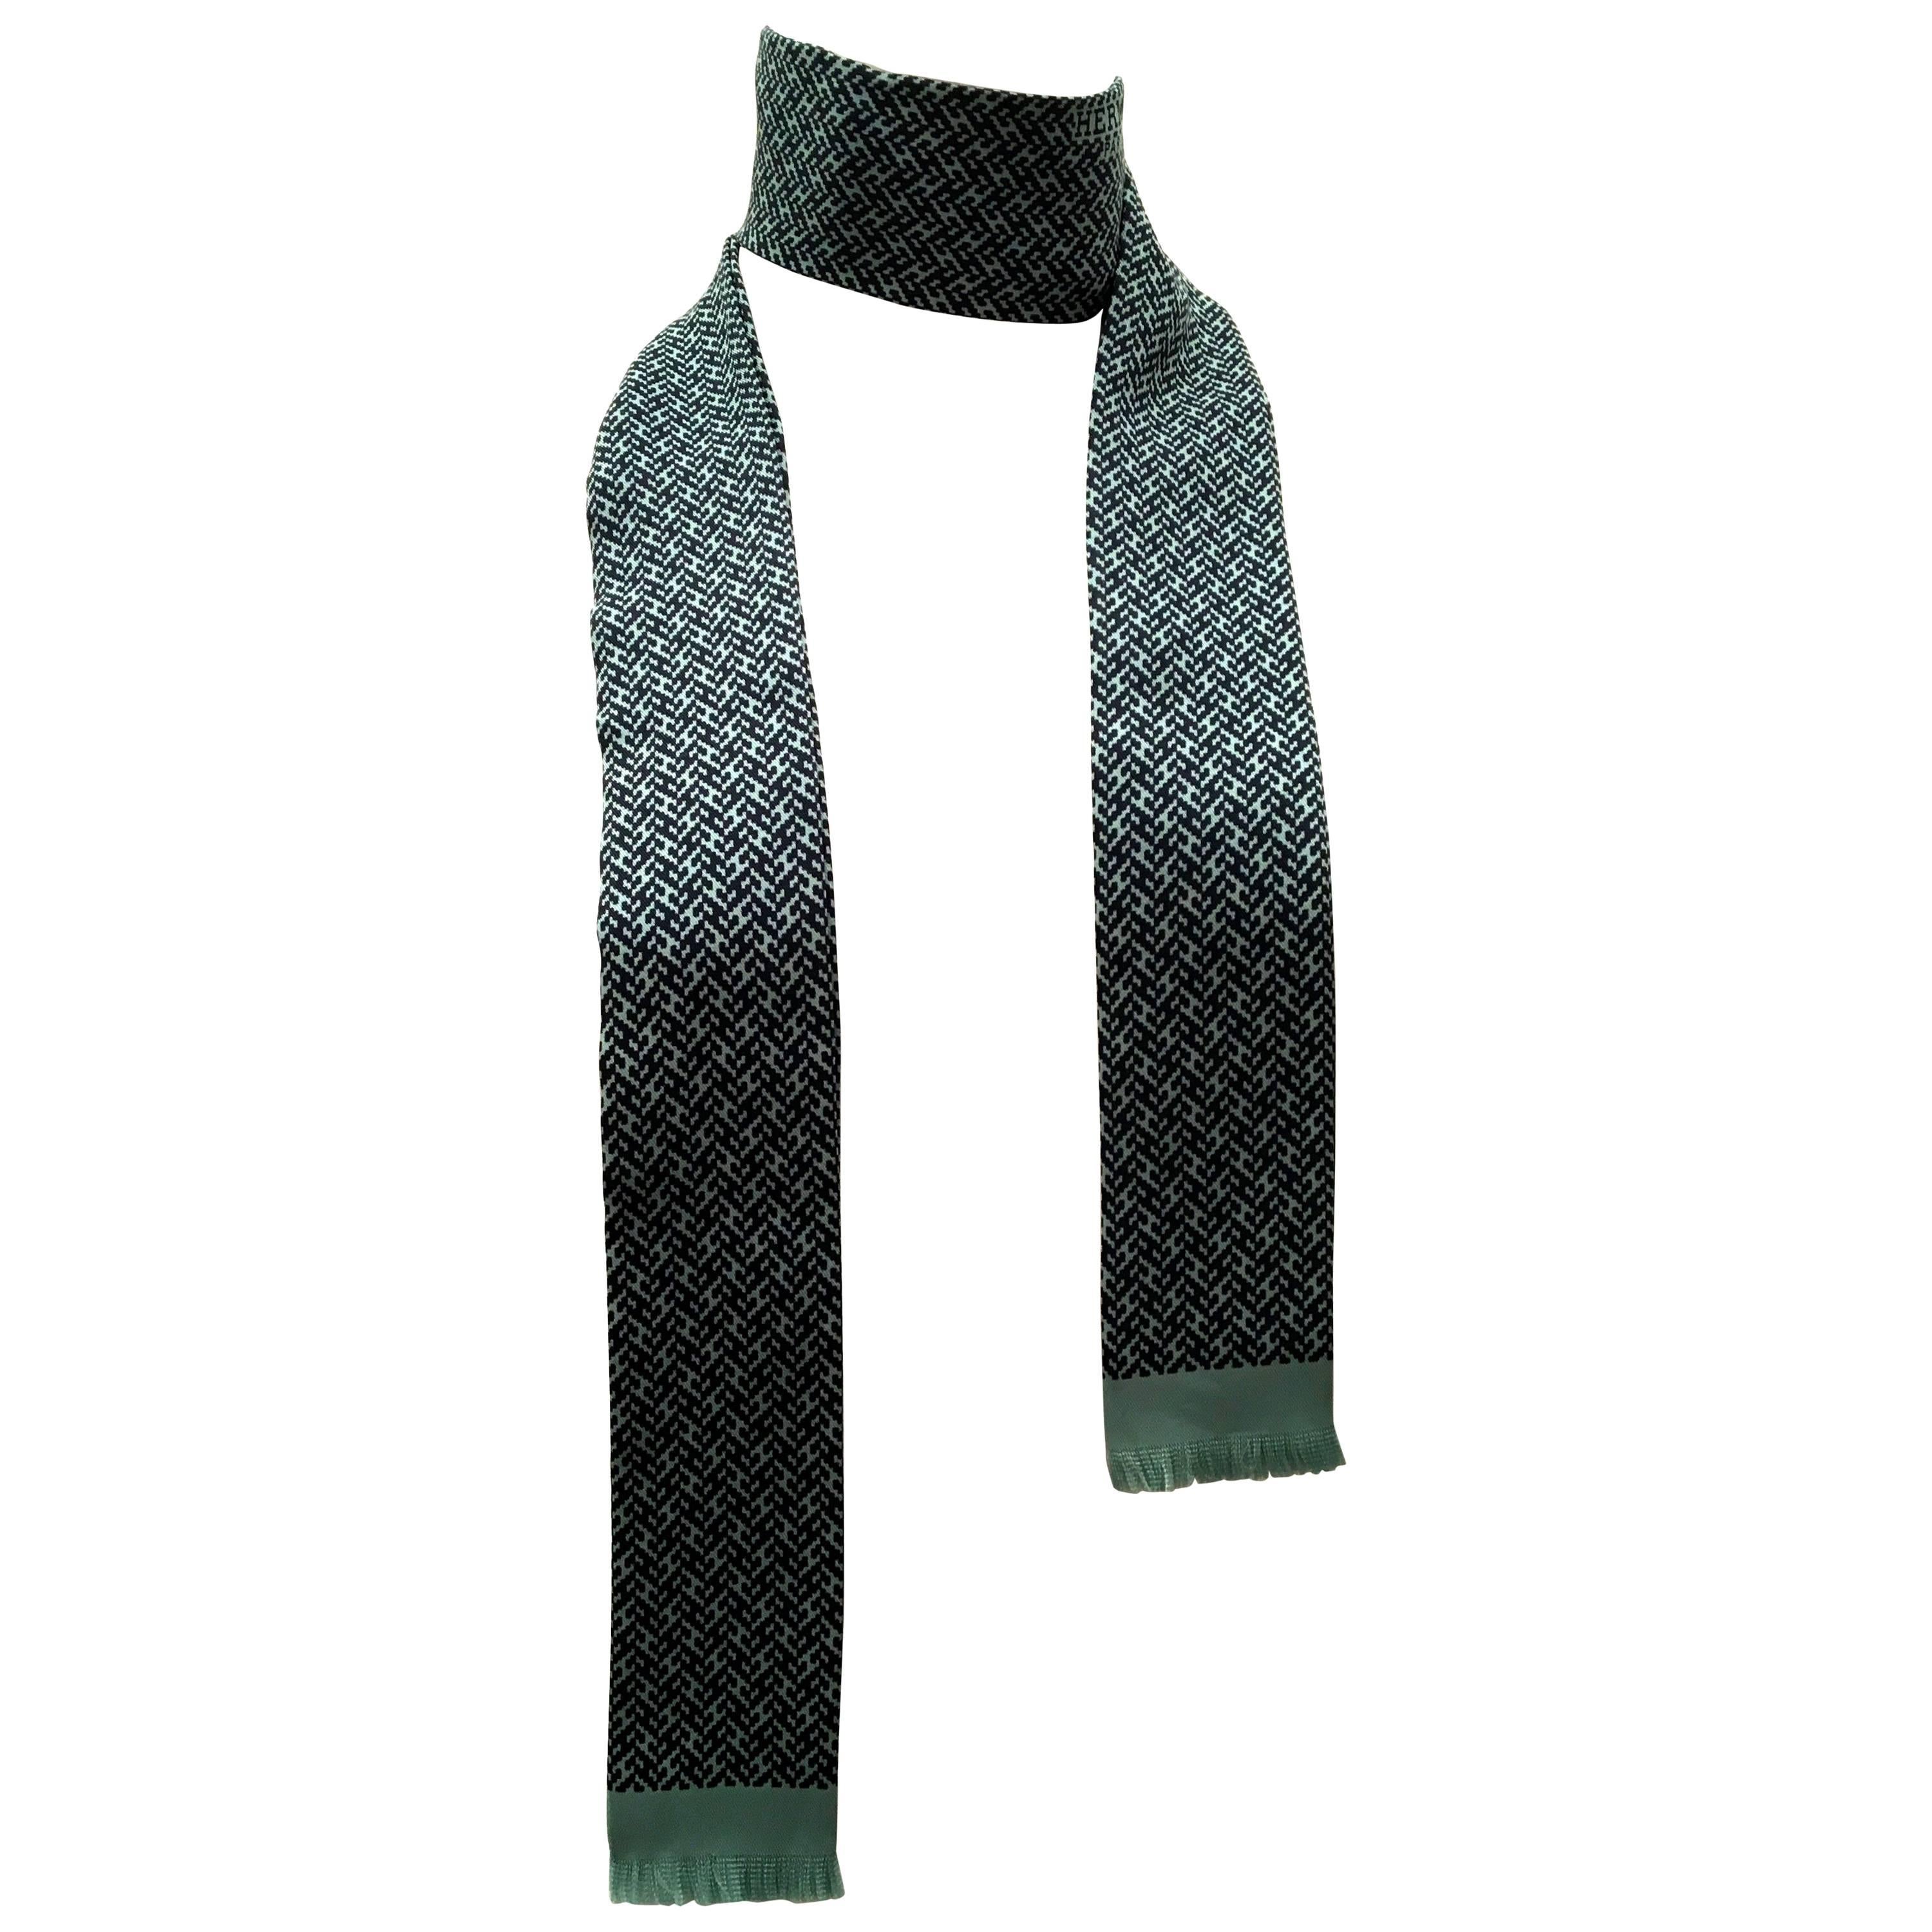 Rare Hermes Scarf / Tie / Belt - 100% Silk - New  For Sale